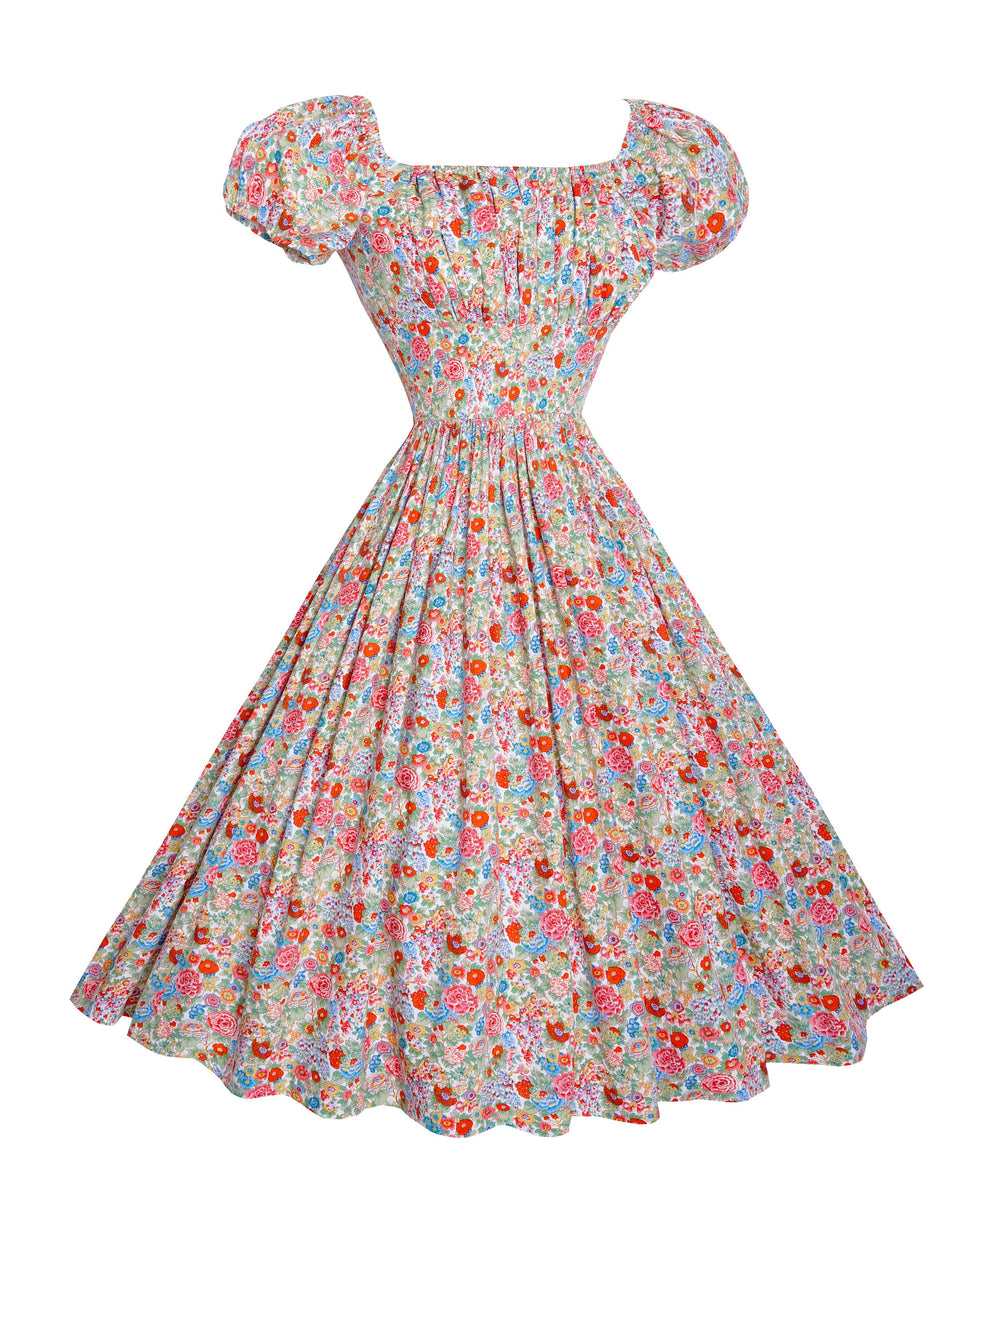 RTS - Size S - Loretta Dress "Kaleidoscope Floral"